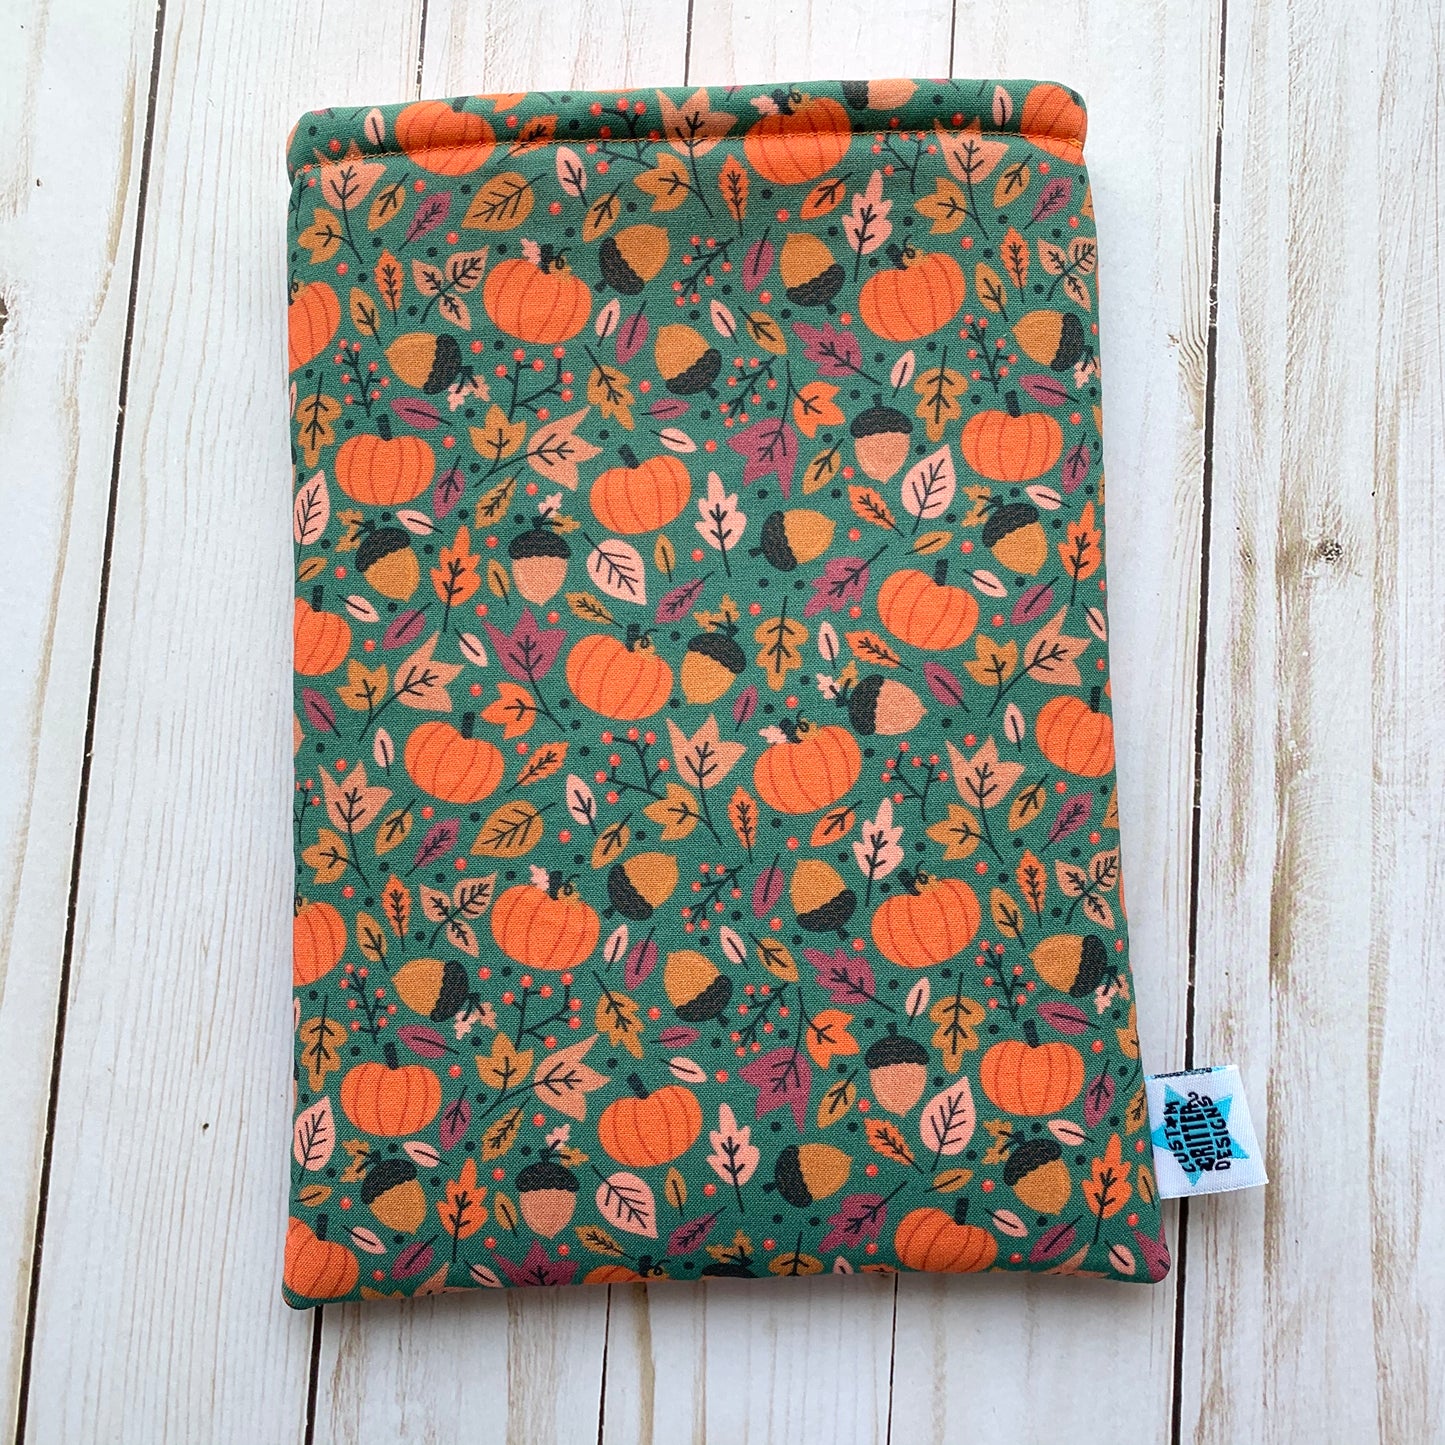 Pumpkins and Acorns - Book Sleeve